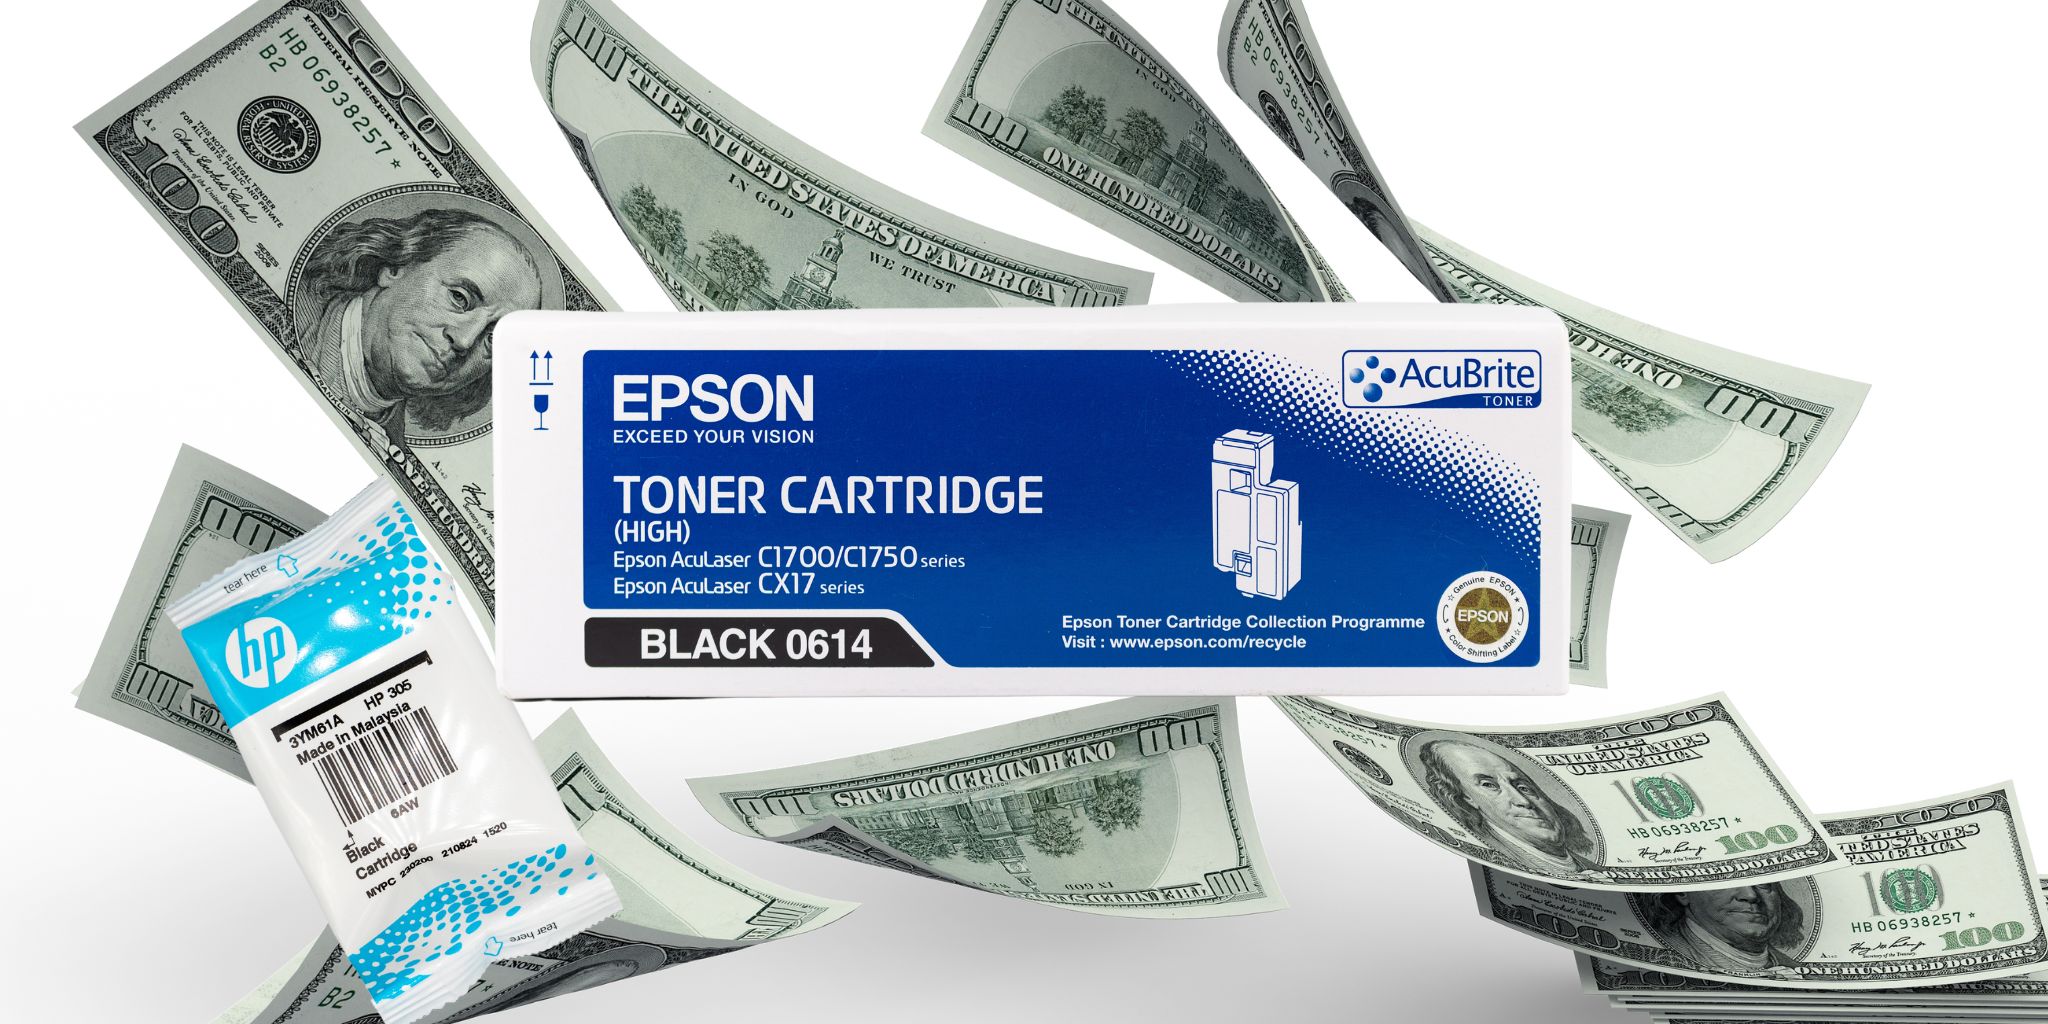 Earn Money by Recycling Toner Cartridges